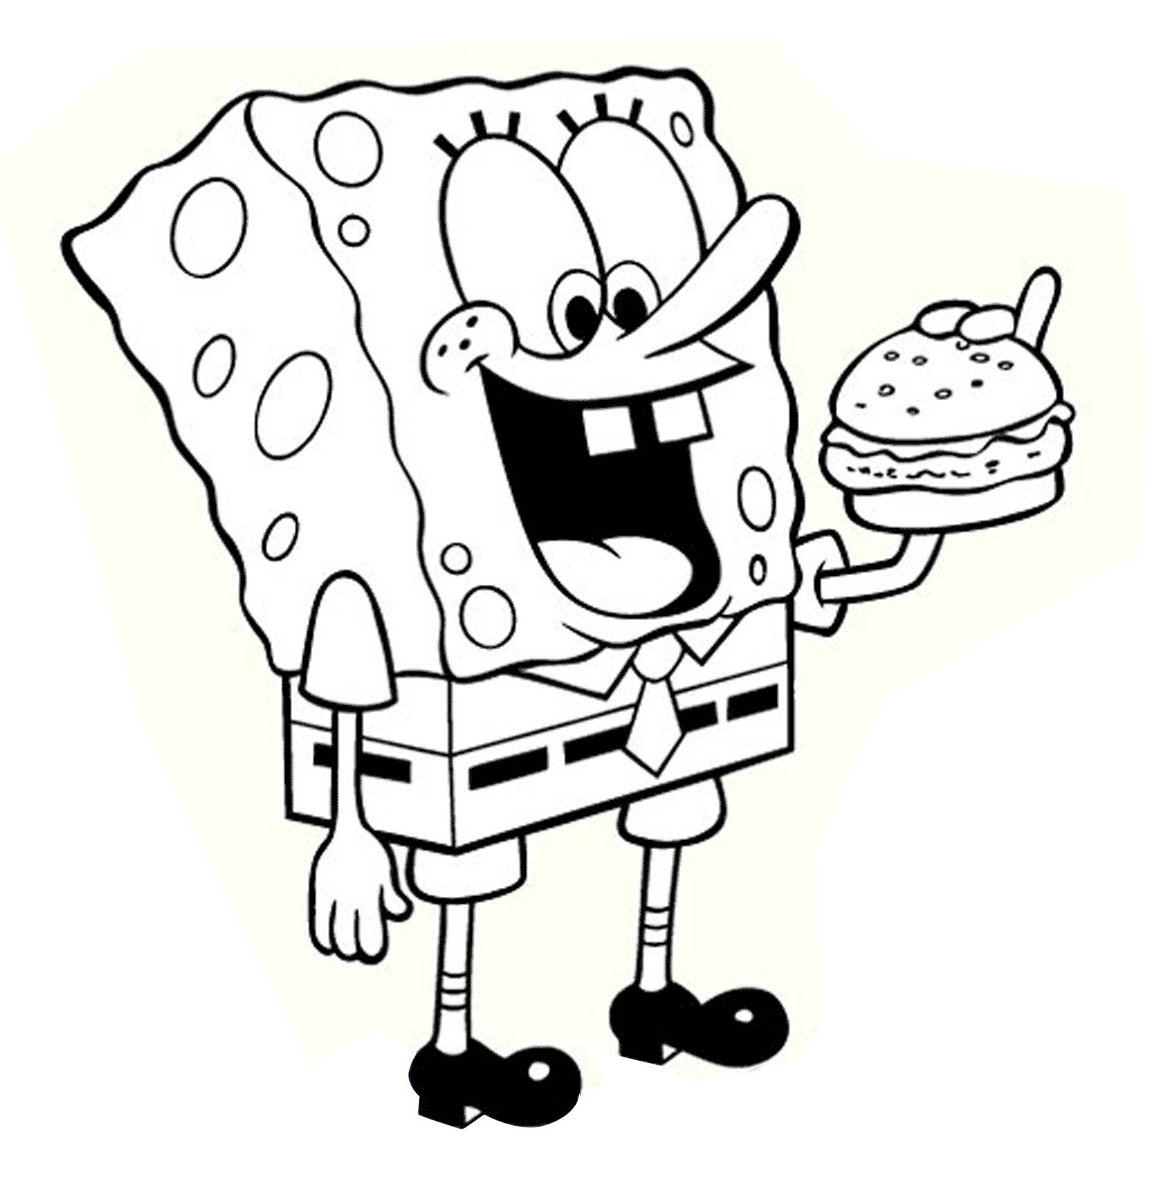 Spongebob Squarepants Free Printable Coloring Pages - Coloring